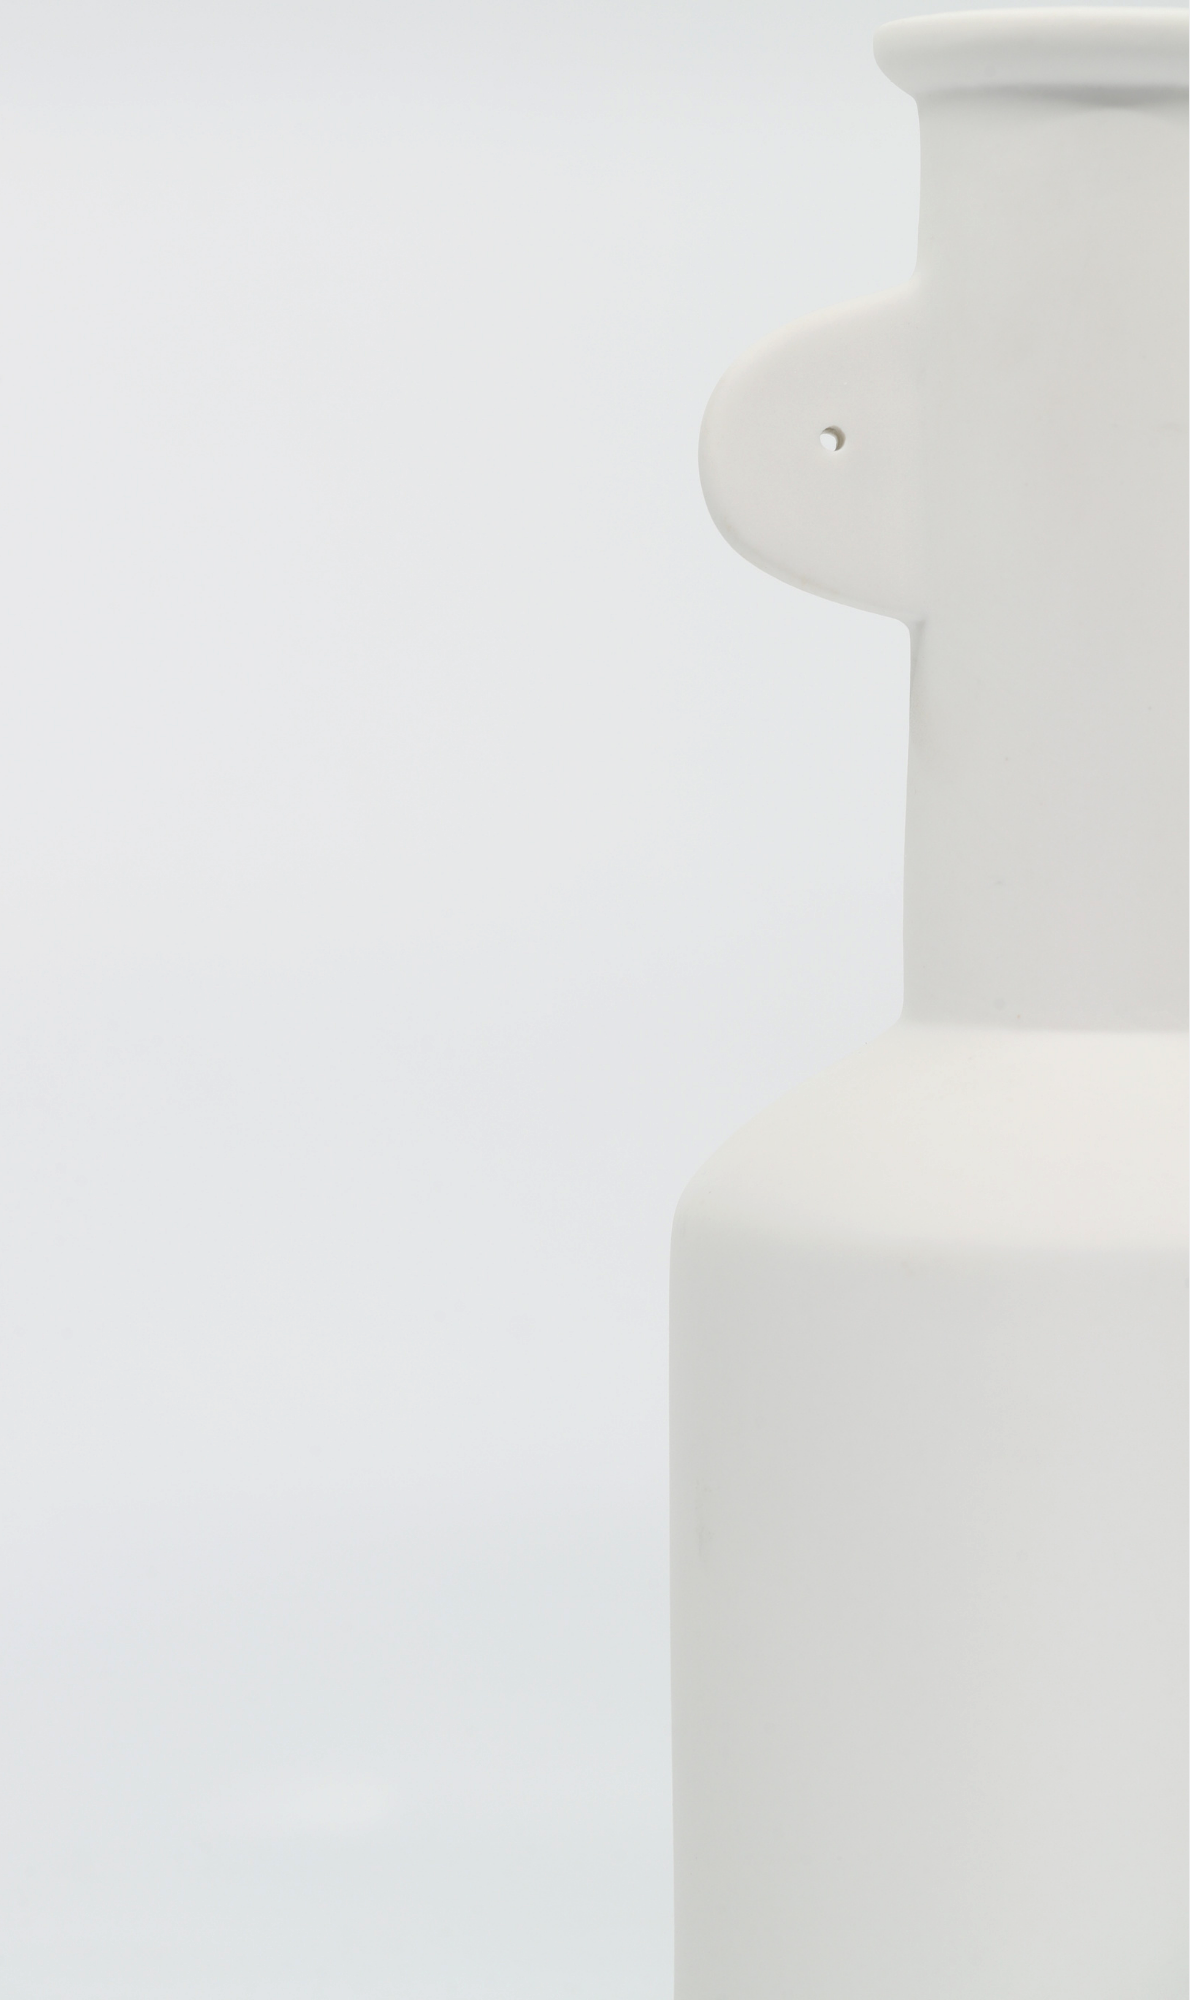 Ceramic Vase | White With Ears